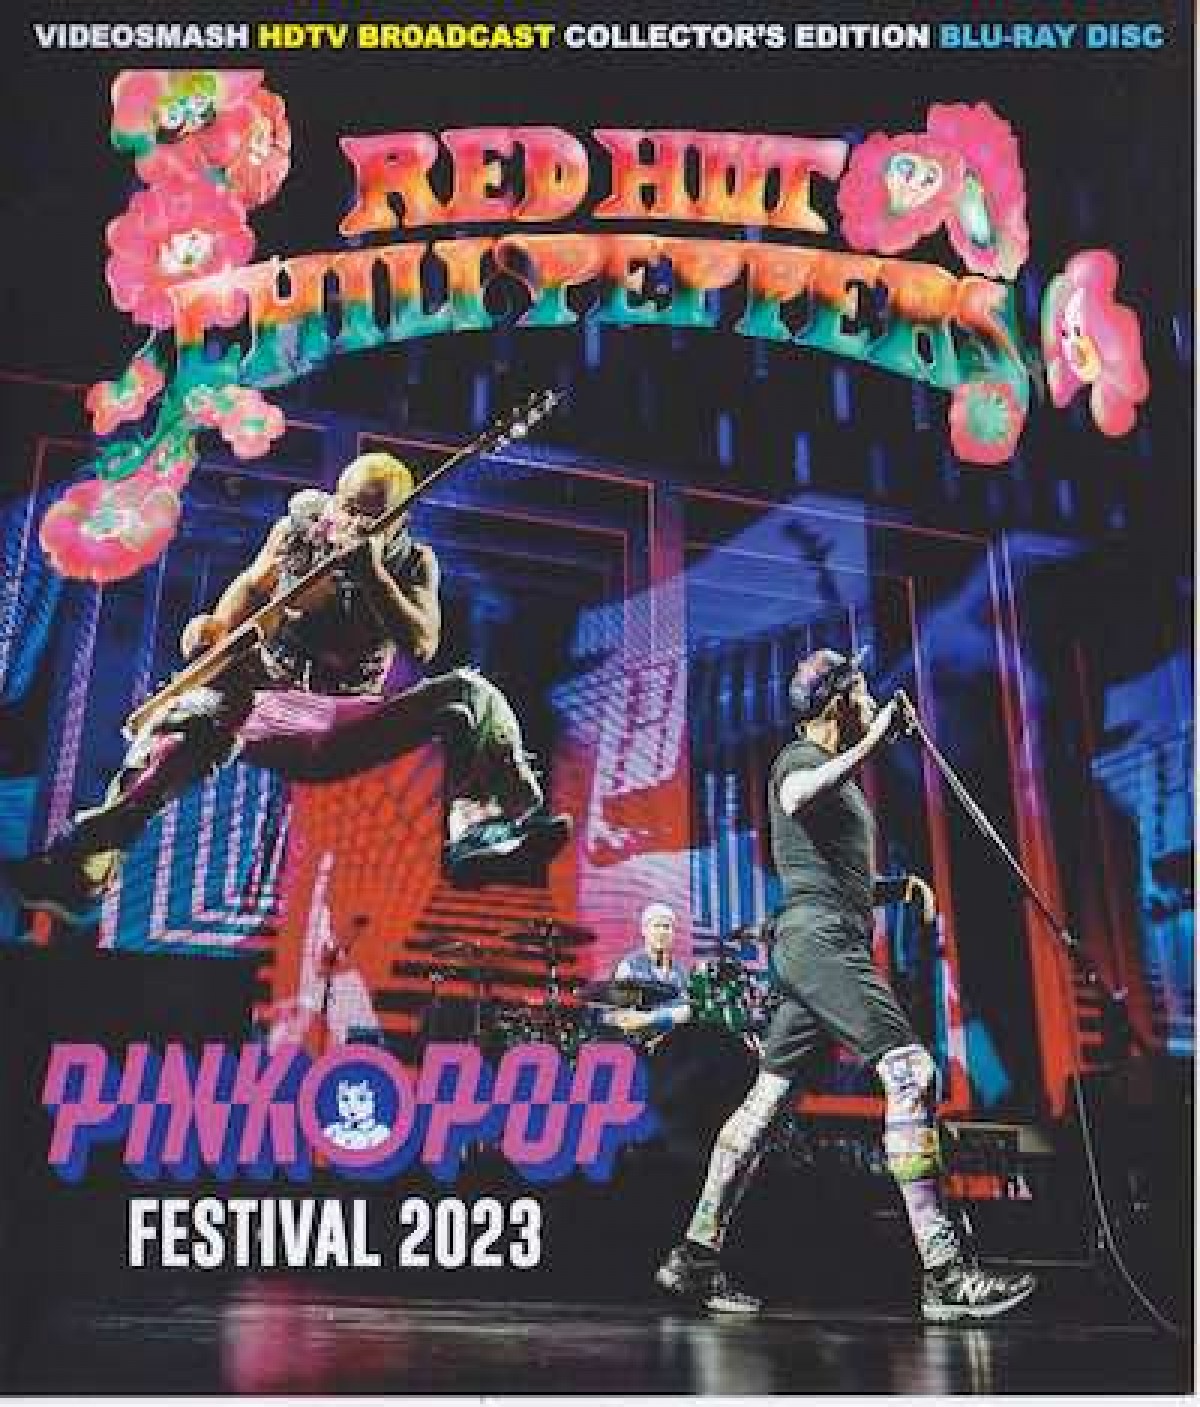 Pinkpop festival 2023